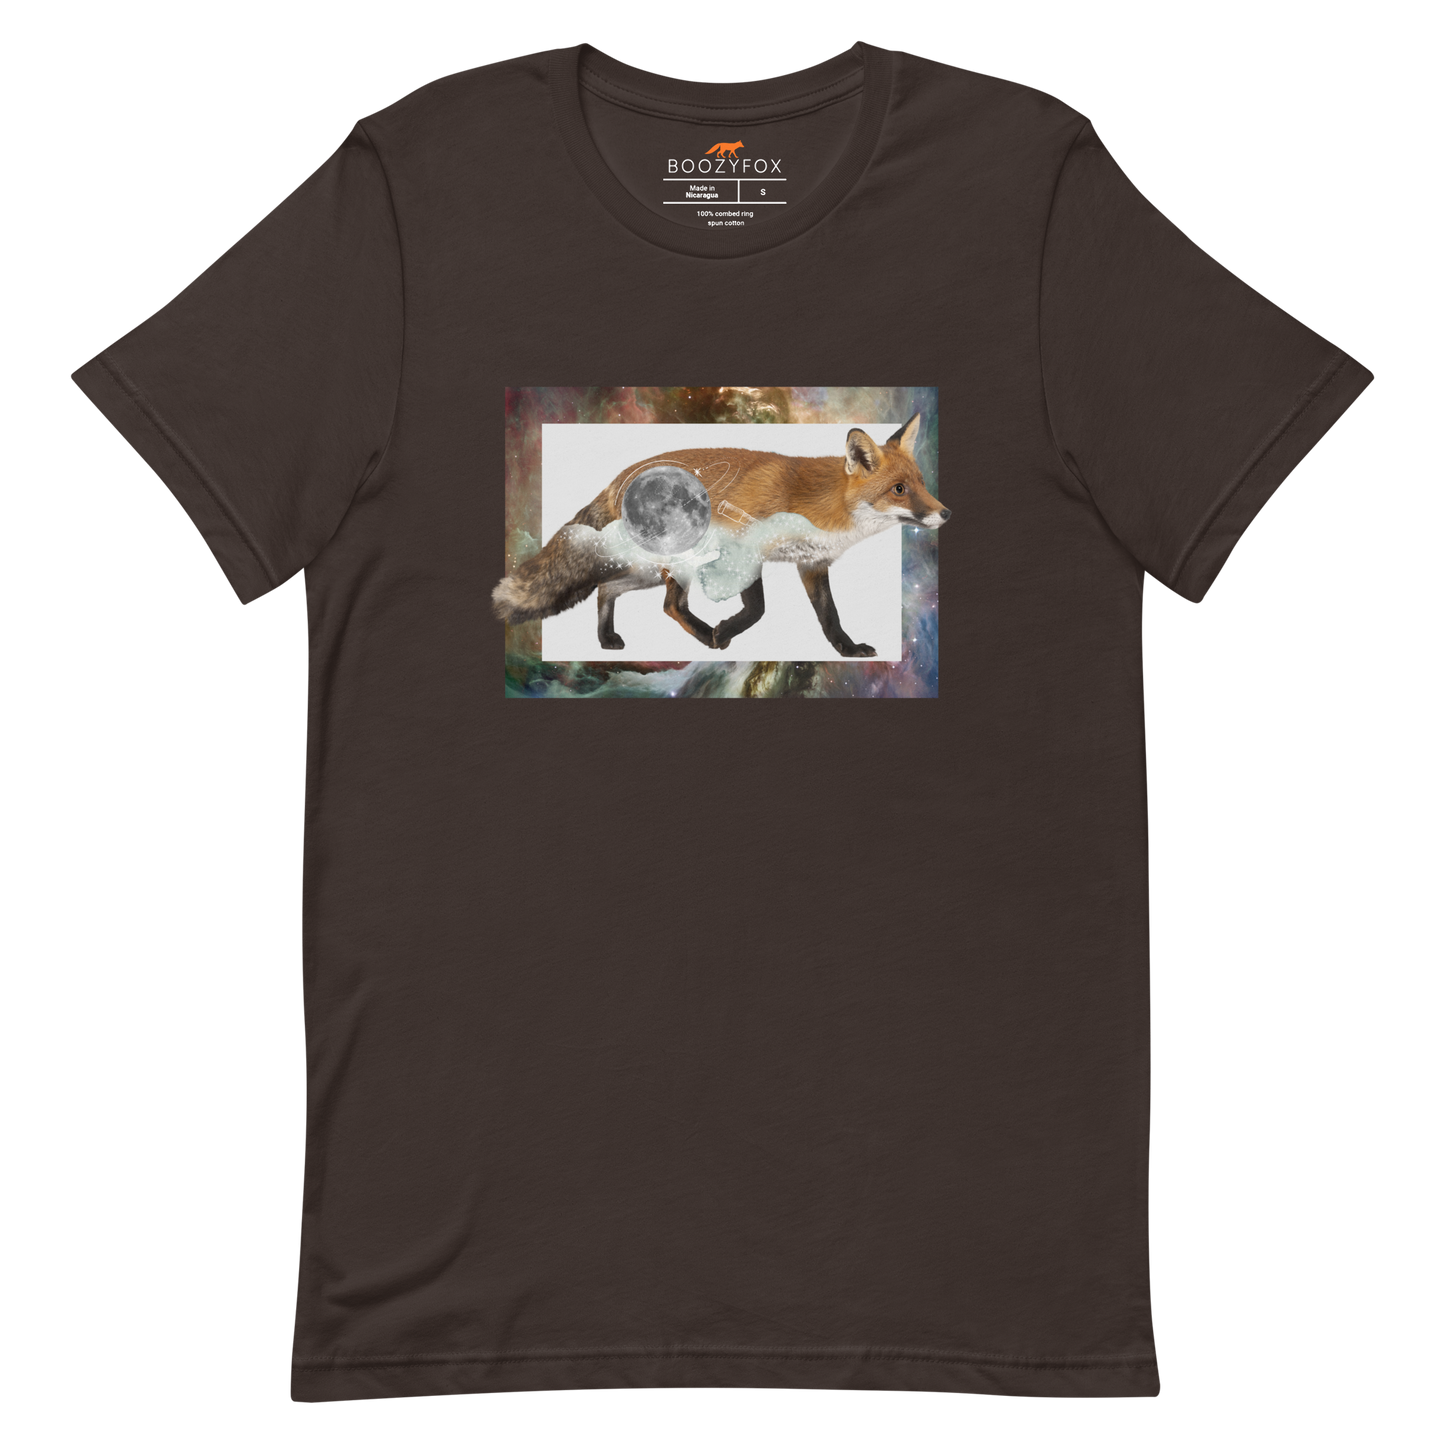 Brown Premium Fox T-Shirt featuring a stellar Space Fox graphic on the chest - Cool Graphic Fox Tees - Boozy Fox